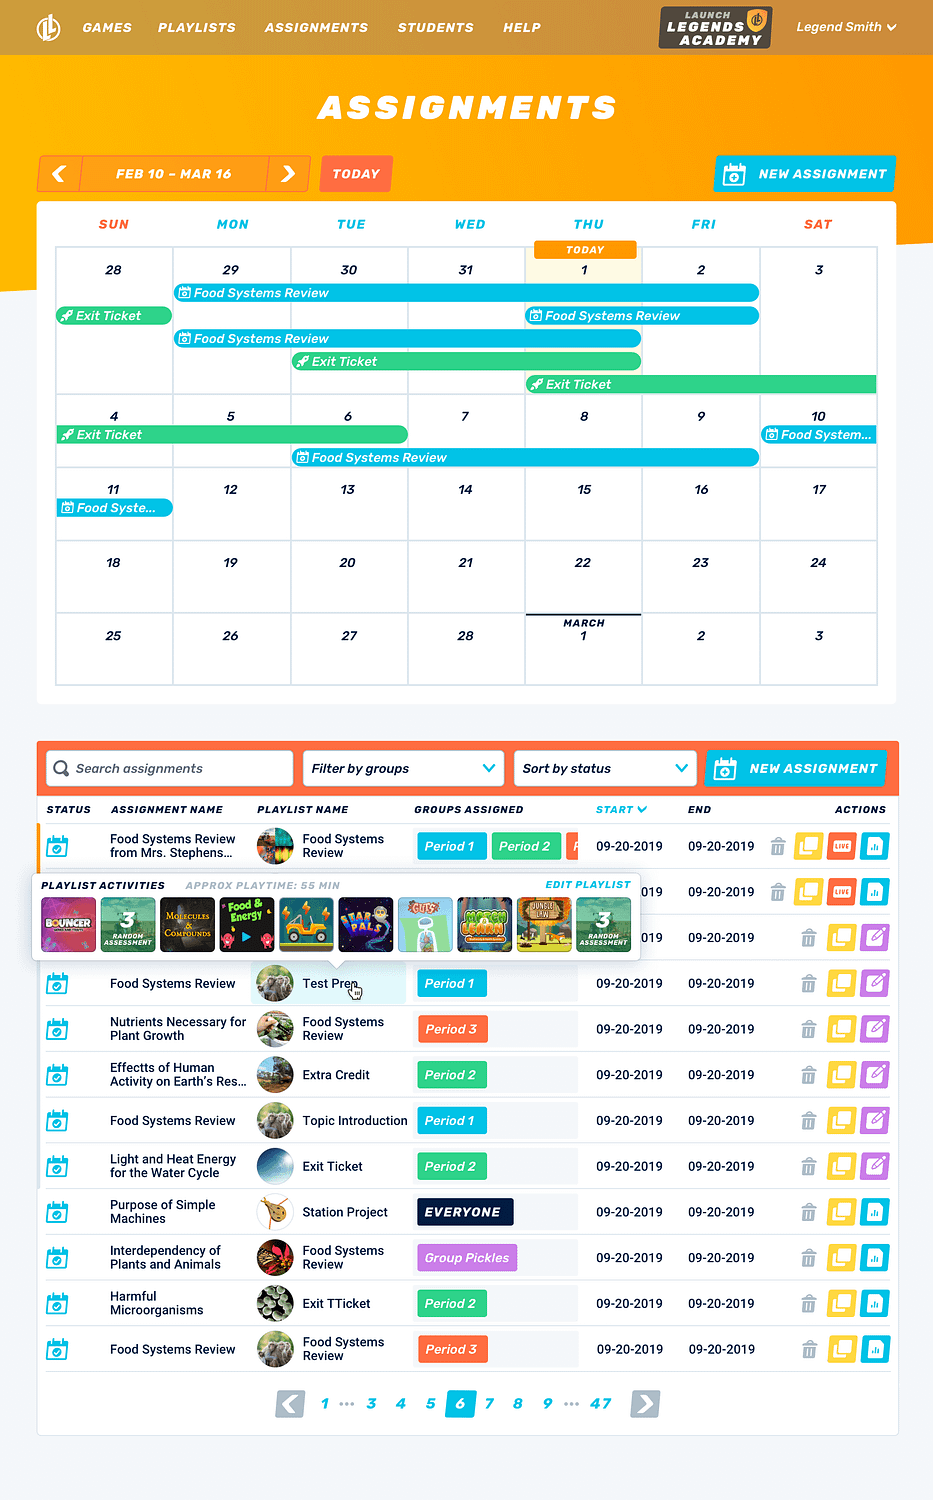 meng-he-legendsoflearning-Desktop-Playlist-calendar